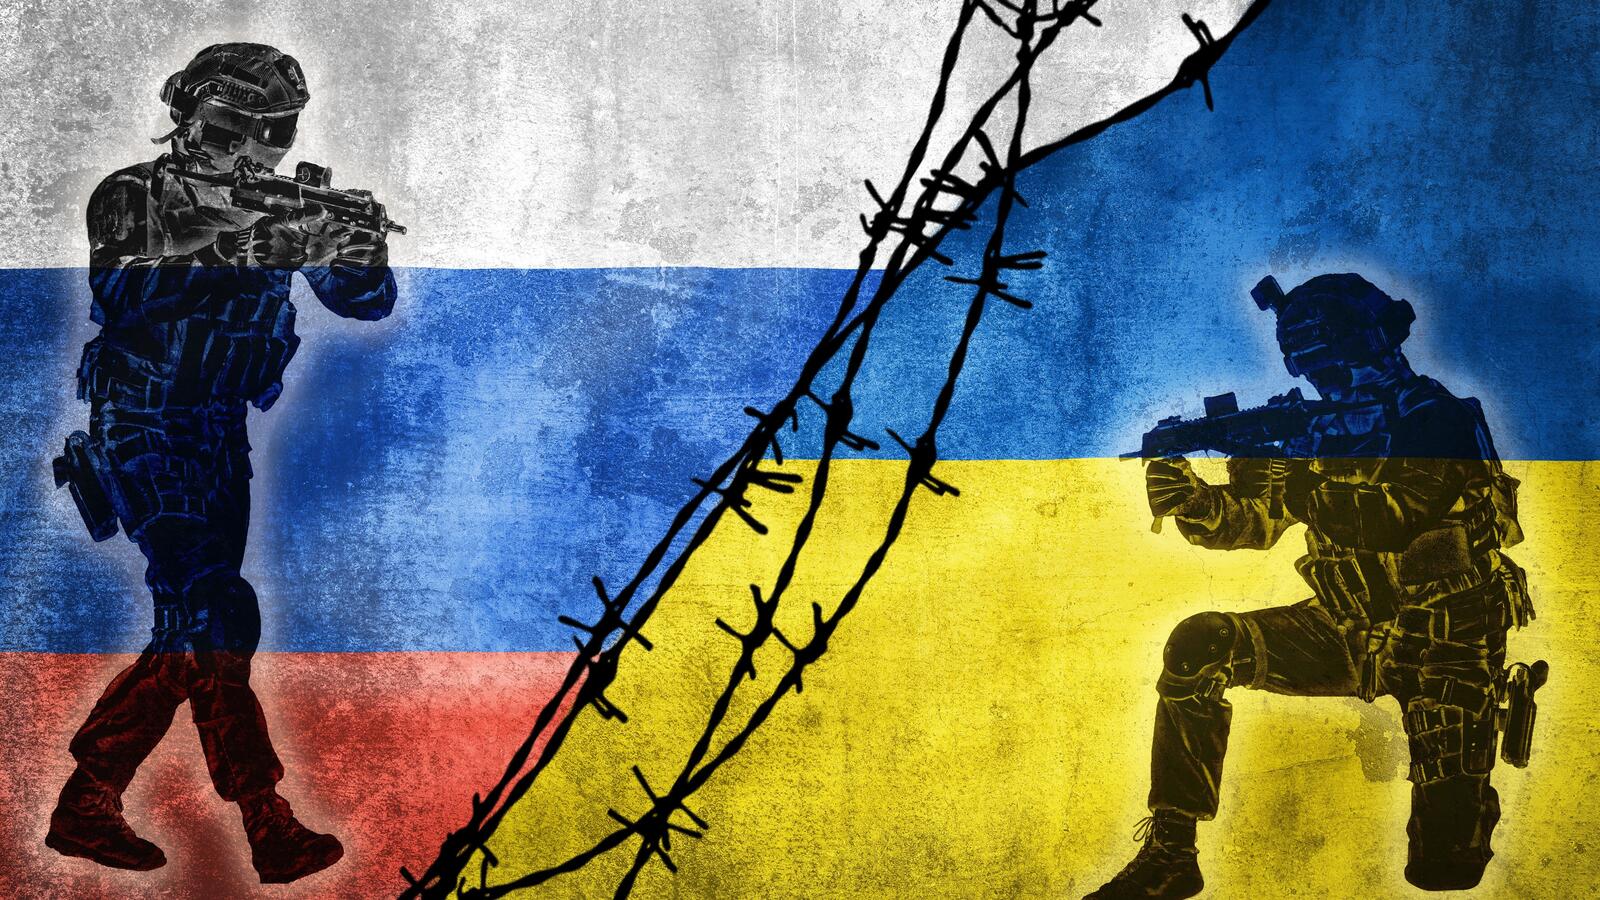 Russian Invasion in Ukraine: What do we know so far